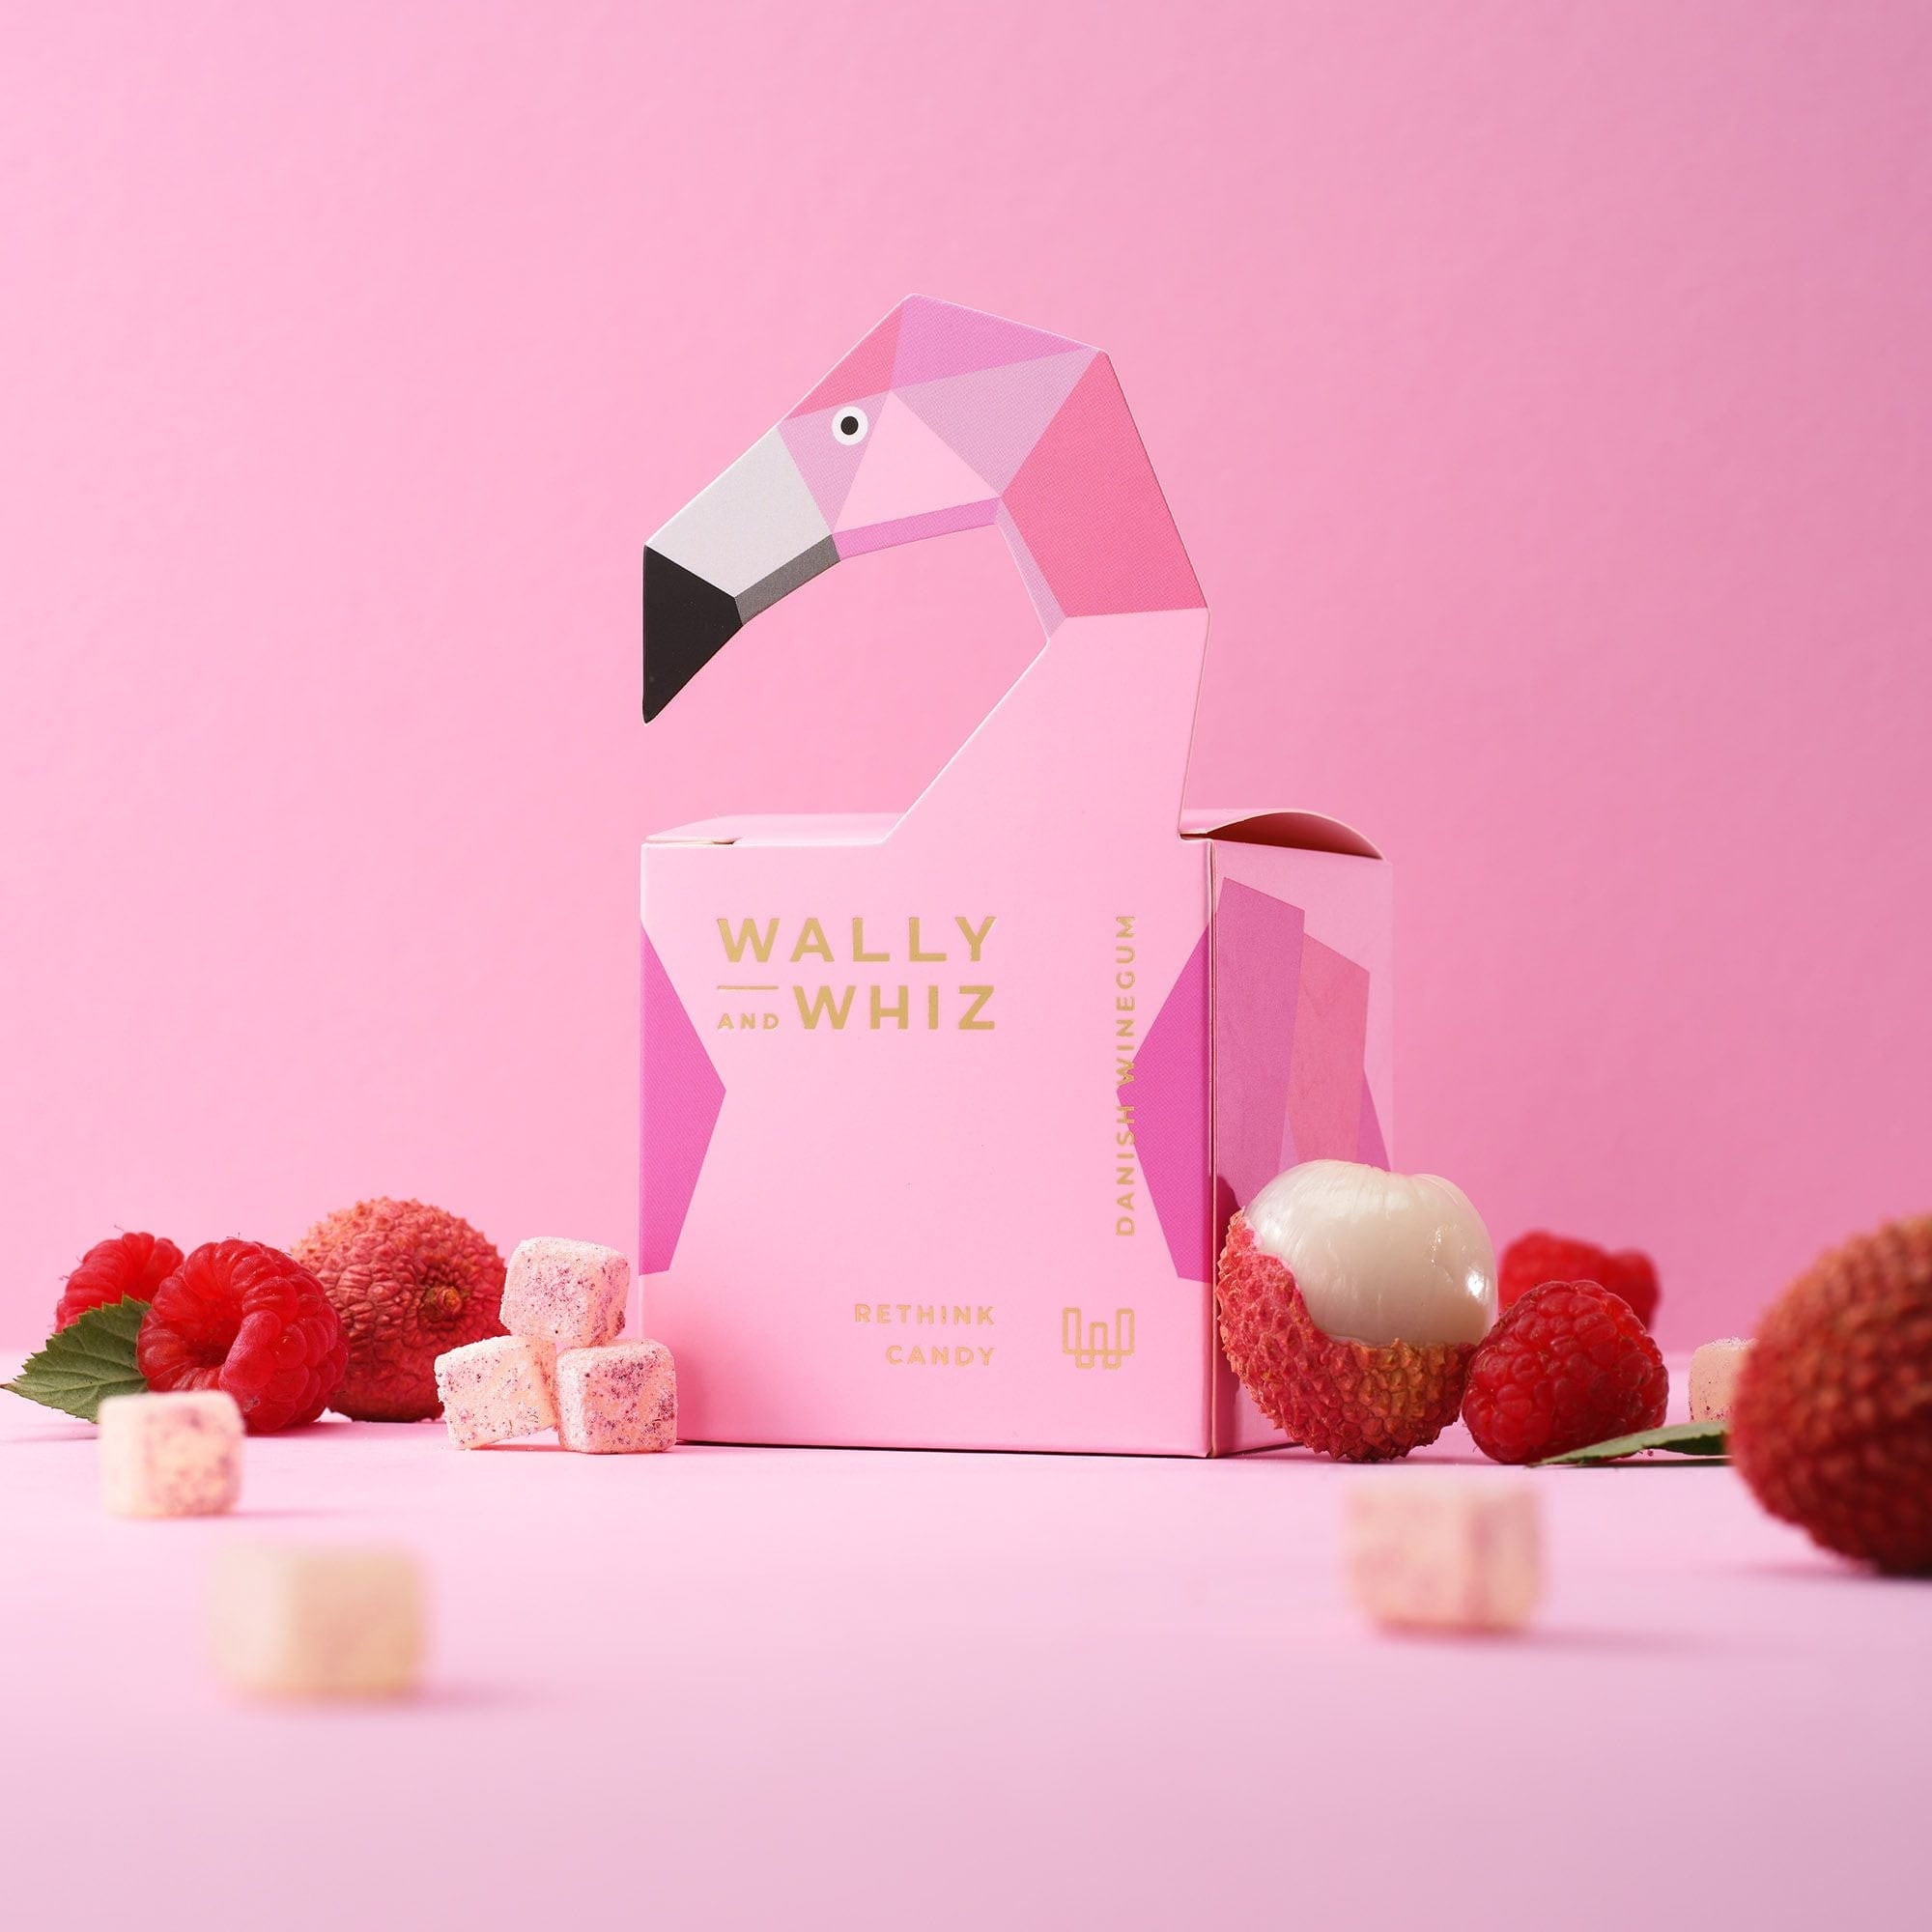 Wally和Whiz Wine Gum Cube，带覆盆子的火烈鸟粉红色lychee，140克